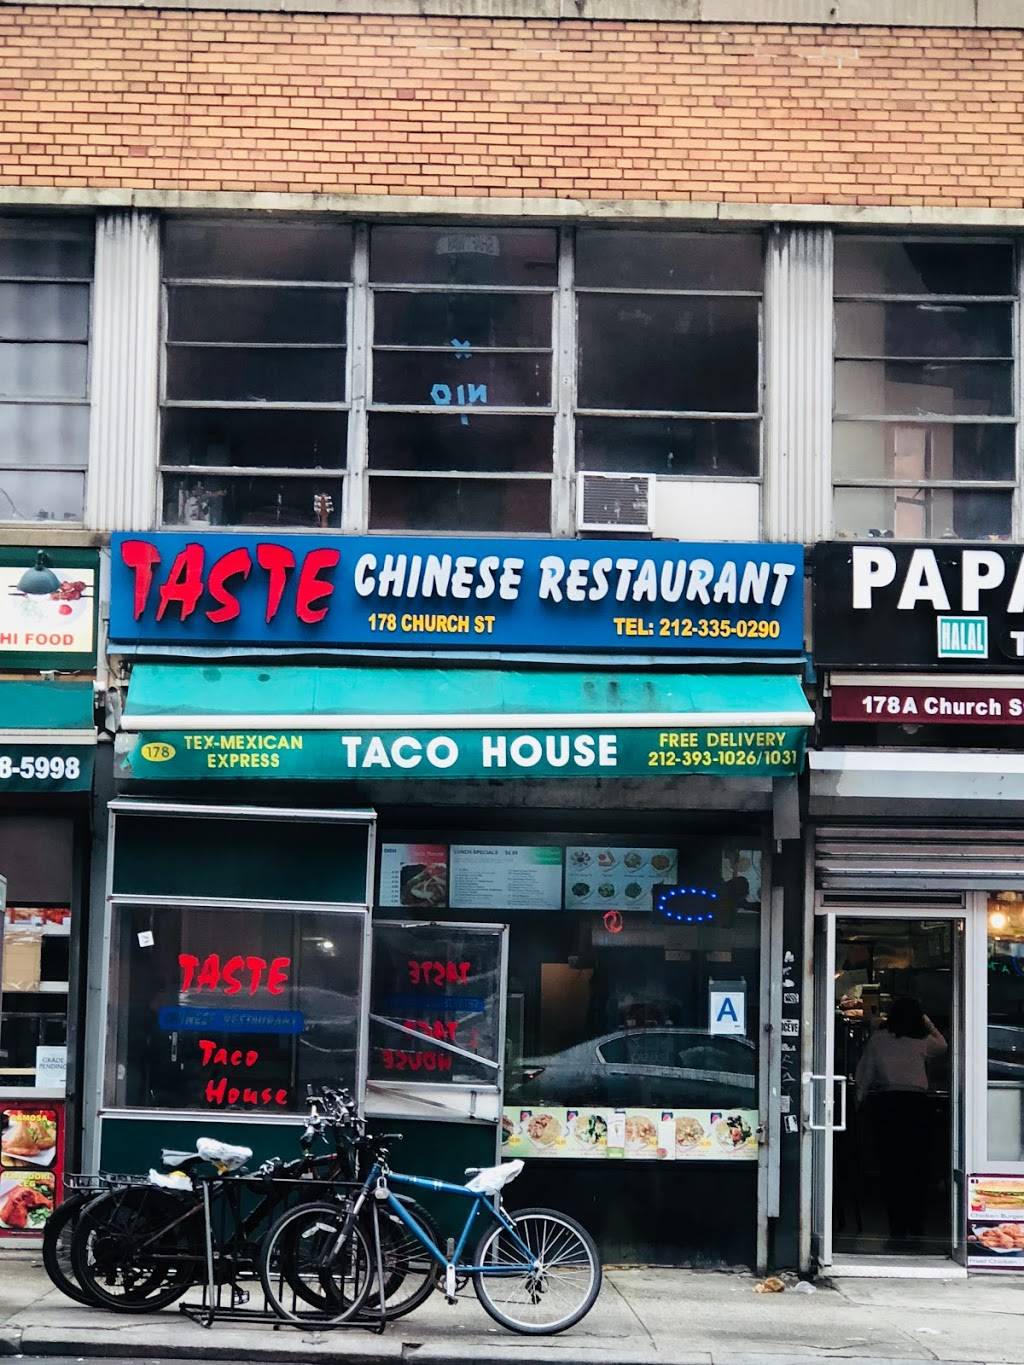 Taste Chinese | restaurant | 3819, 178 Church St, New York, NY 10013, USA | 2123350290 OR +1 212-335-0290